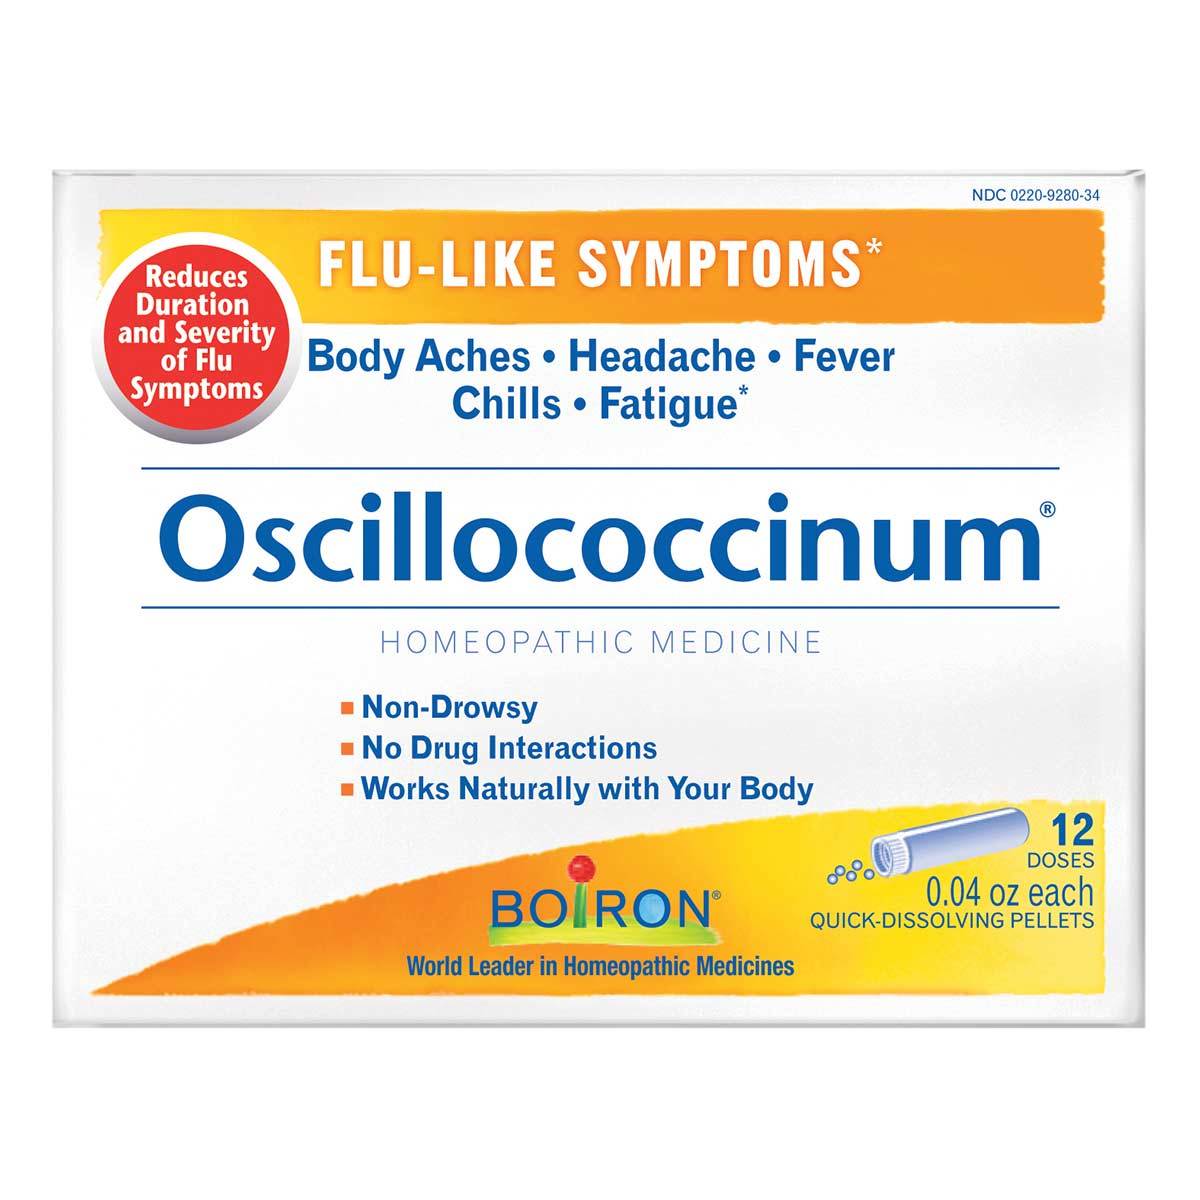 Primary image of Oscillococcinum 12 Dose Value Pack